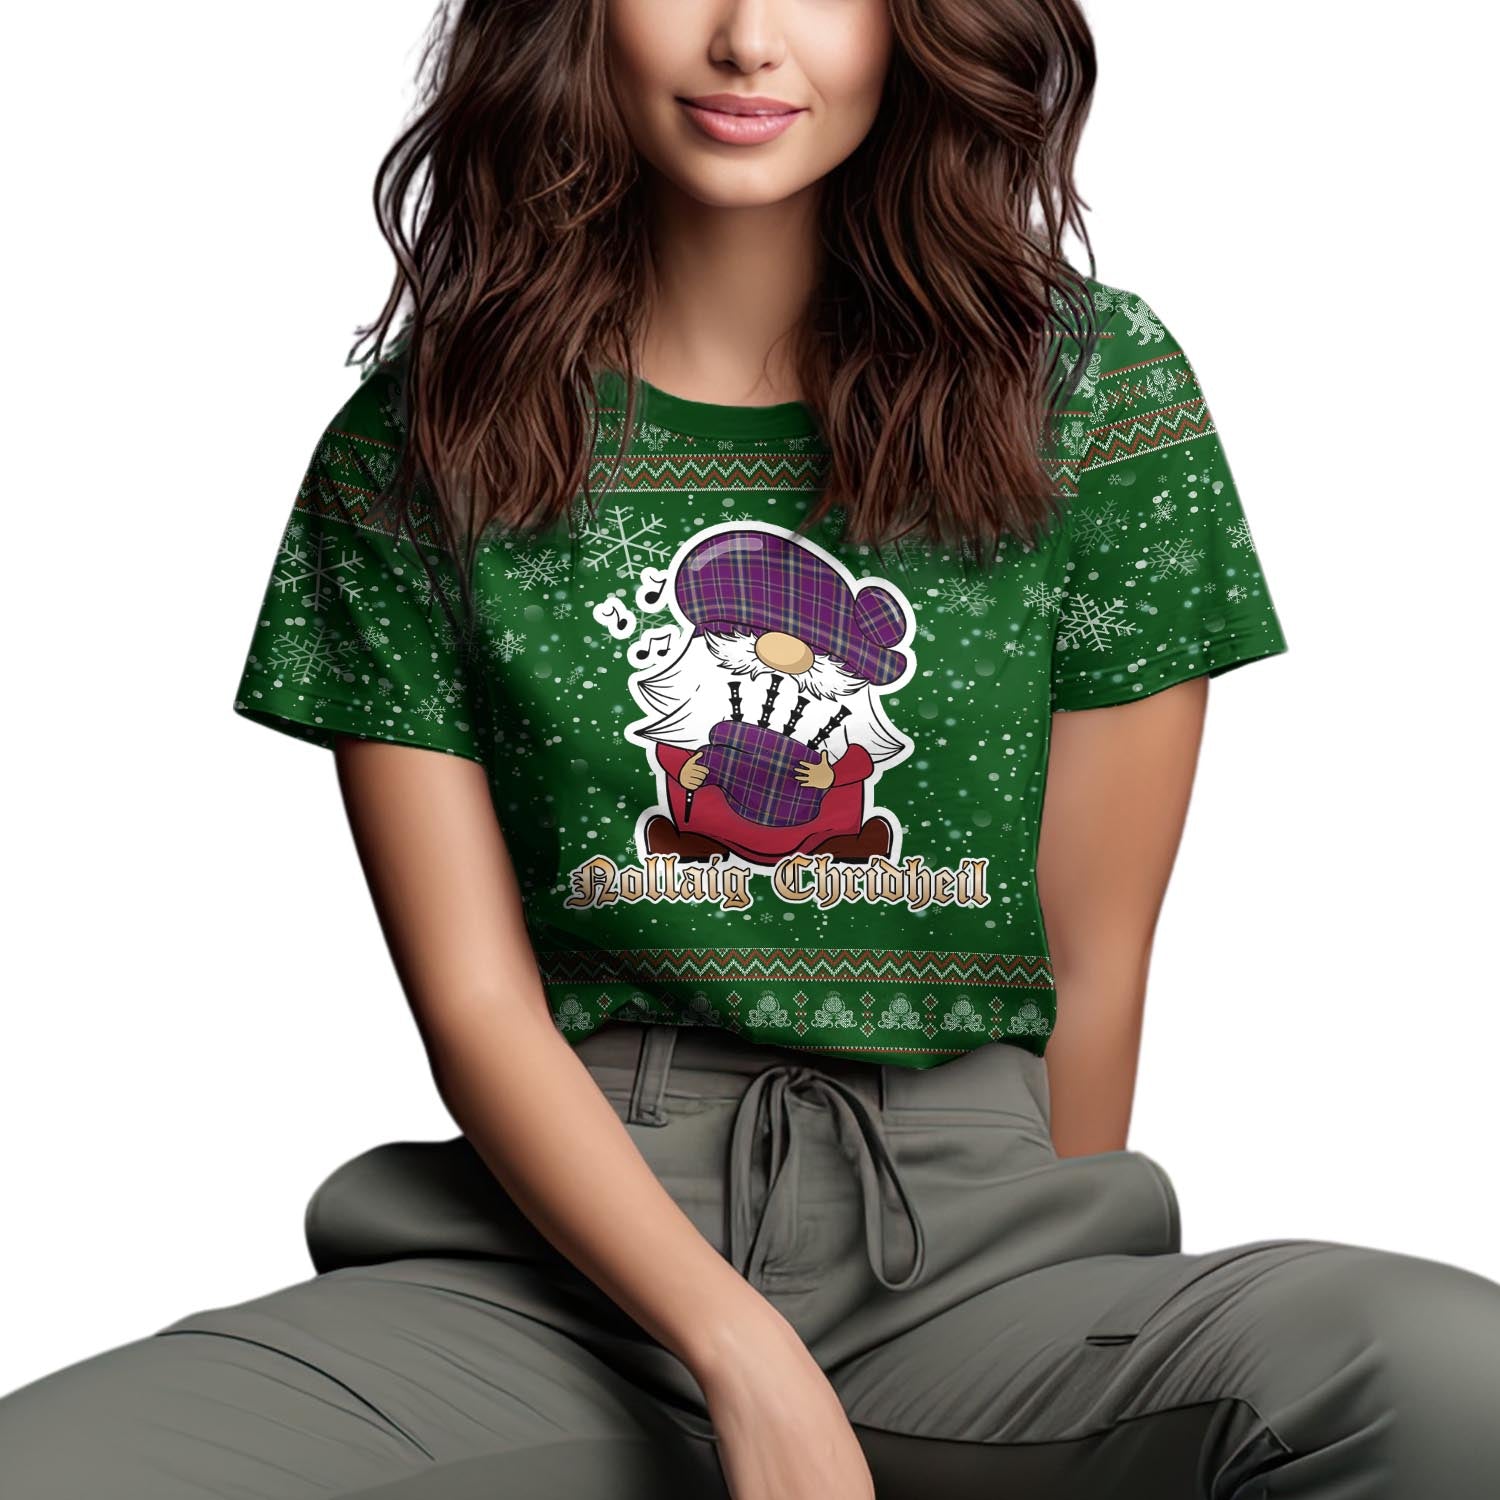 O'Riagain Clan Christmas Family T-Shirt with Funny Gnome Playing Bagpipes Women's Shirt Green - Tartanvibesclothing